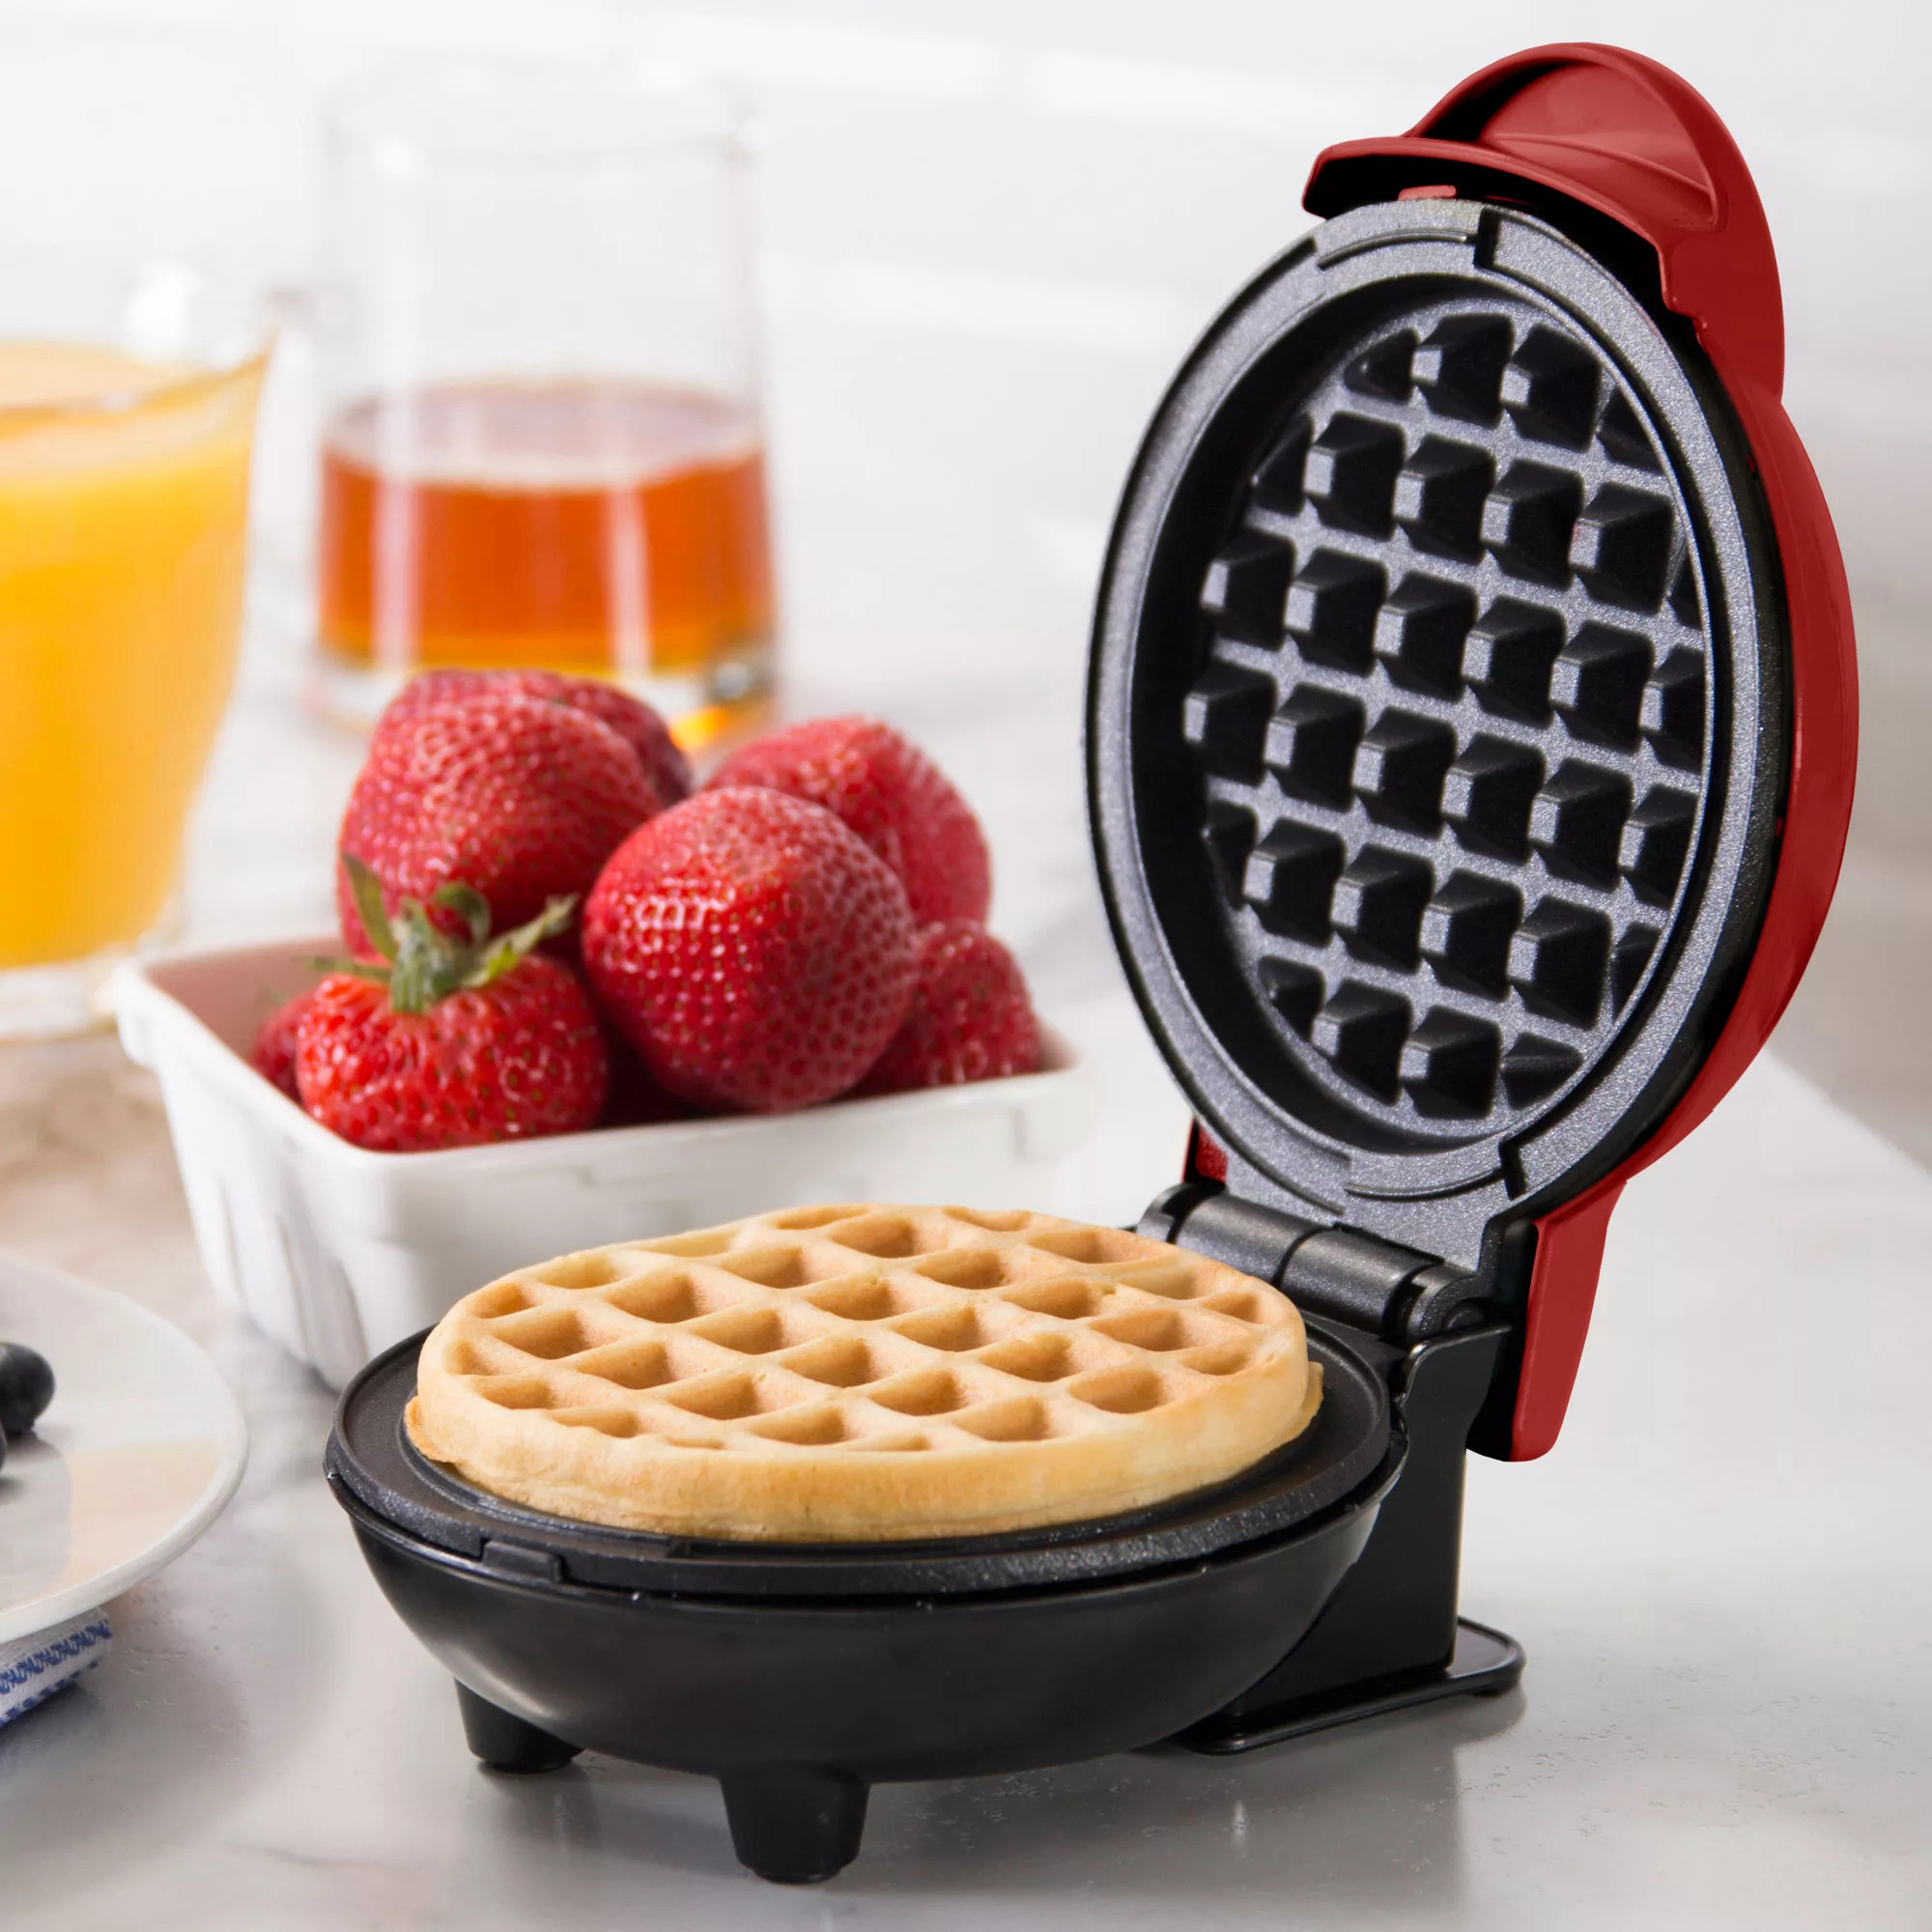 https://d.newsweek.com/en/full/1975843/dash-waffle-maker.jpg